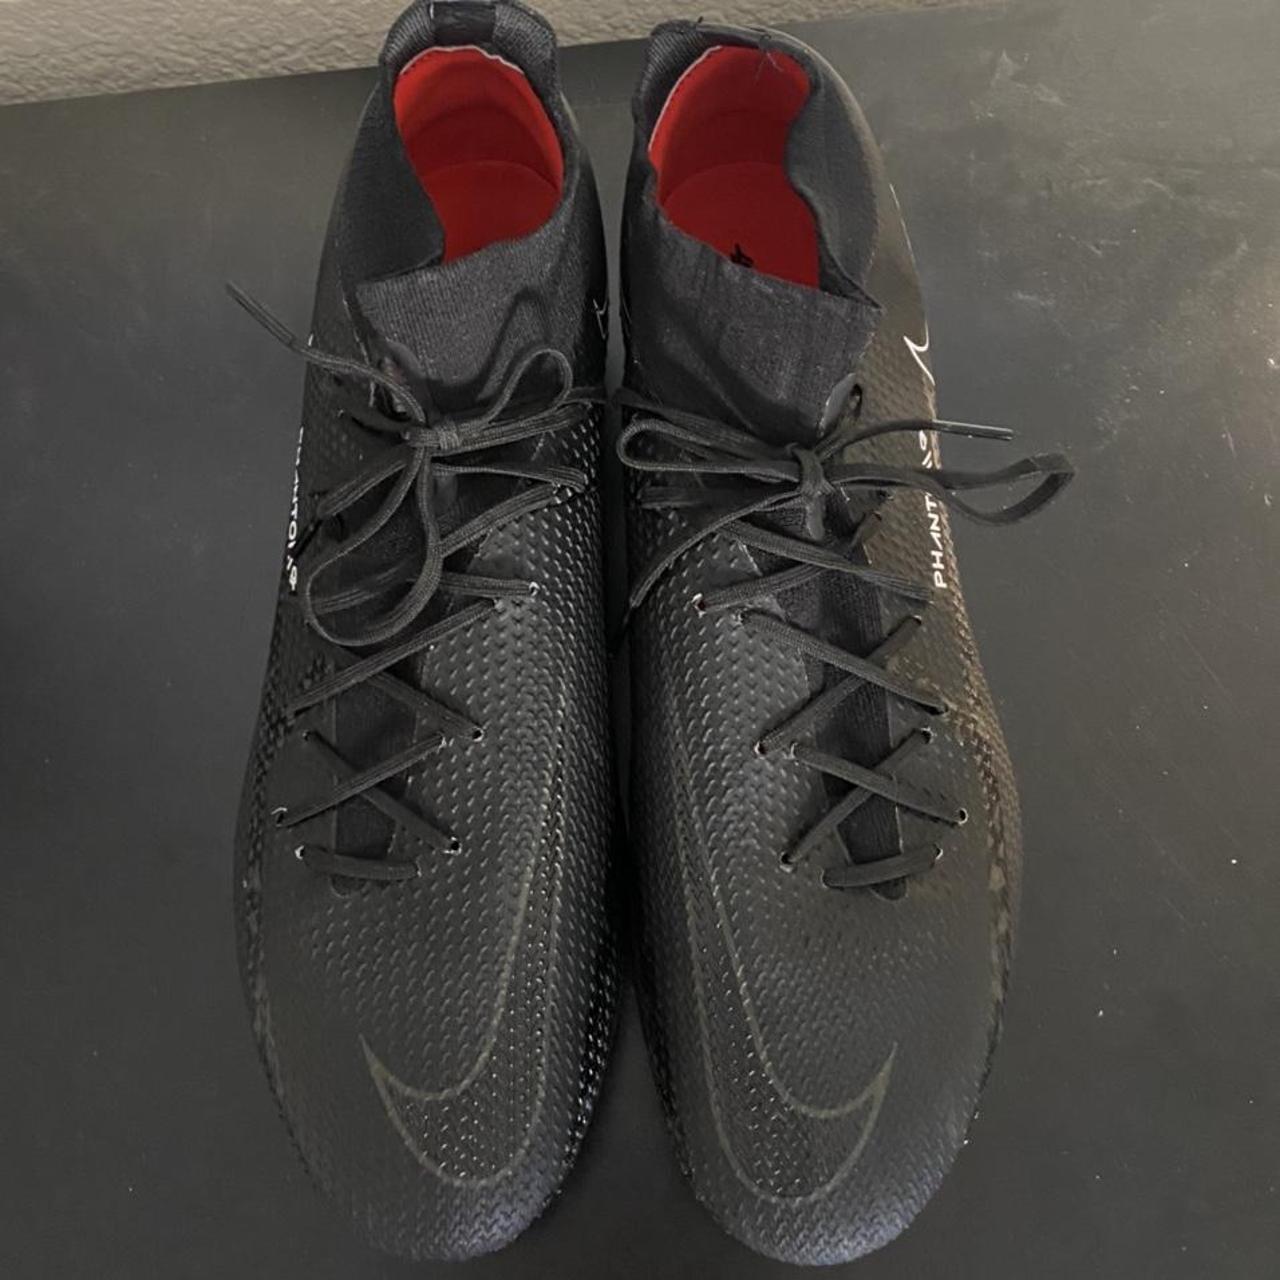 Product Image 4 - Nike Phantom Soccer Cleats/Football Boots

worn